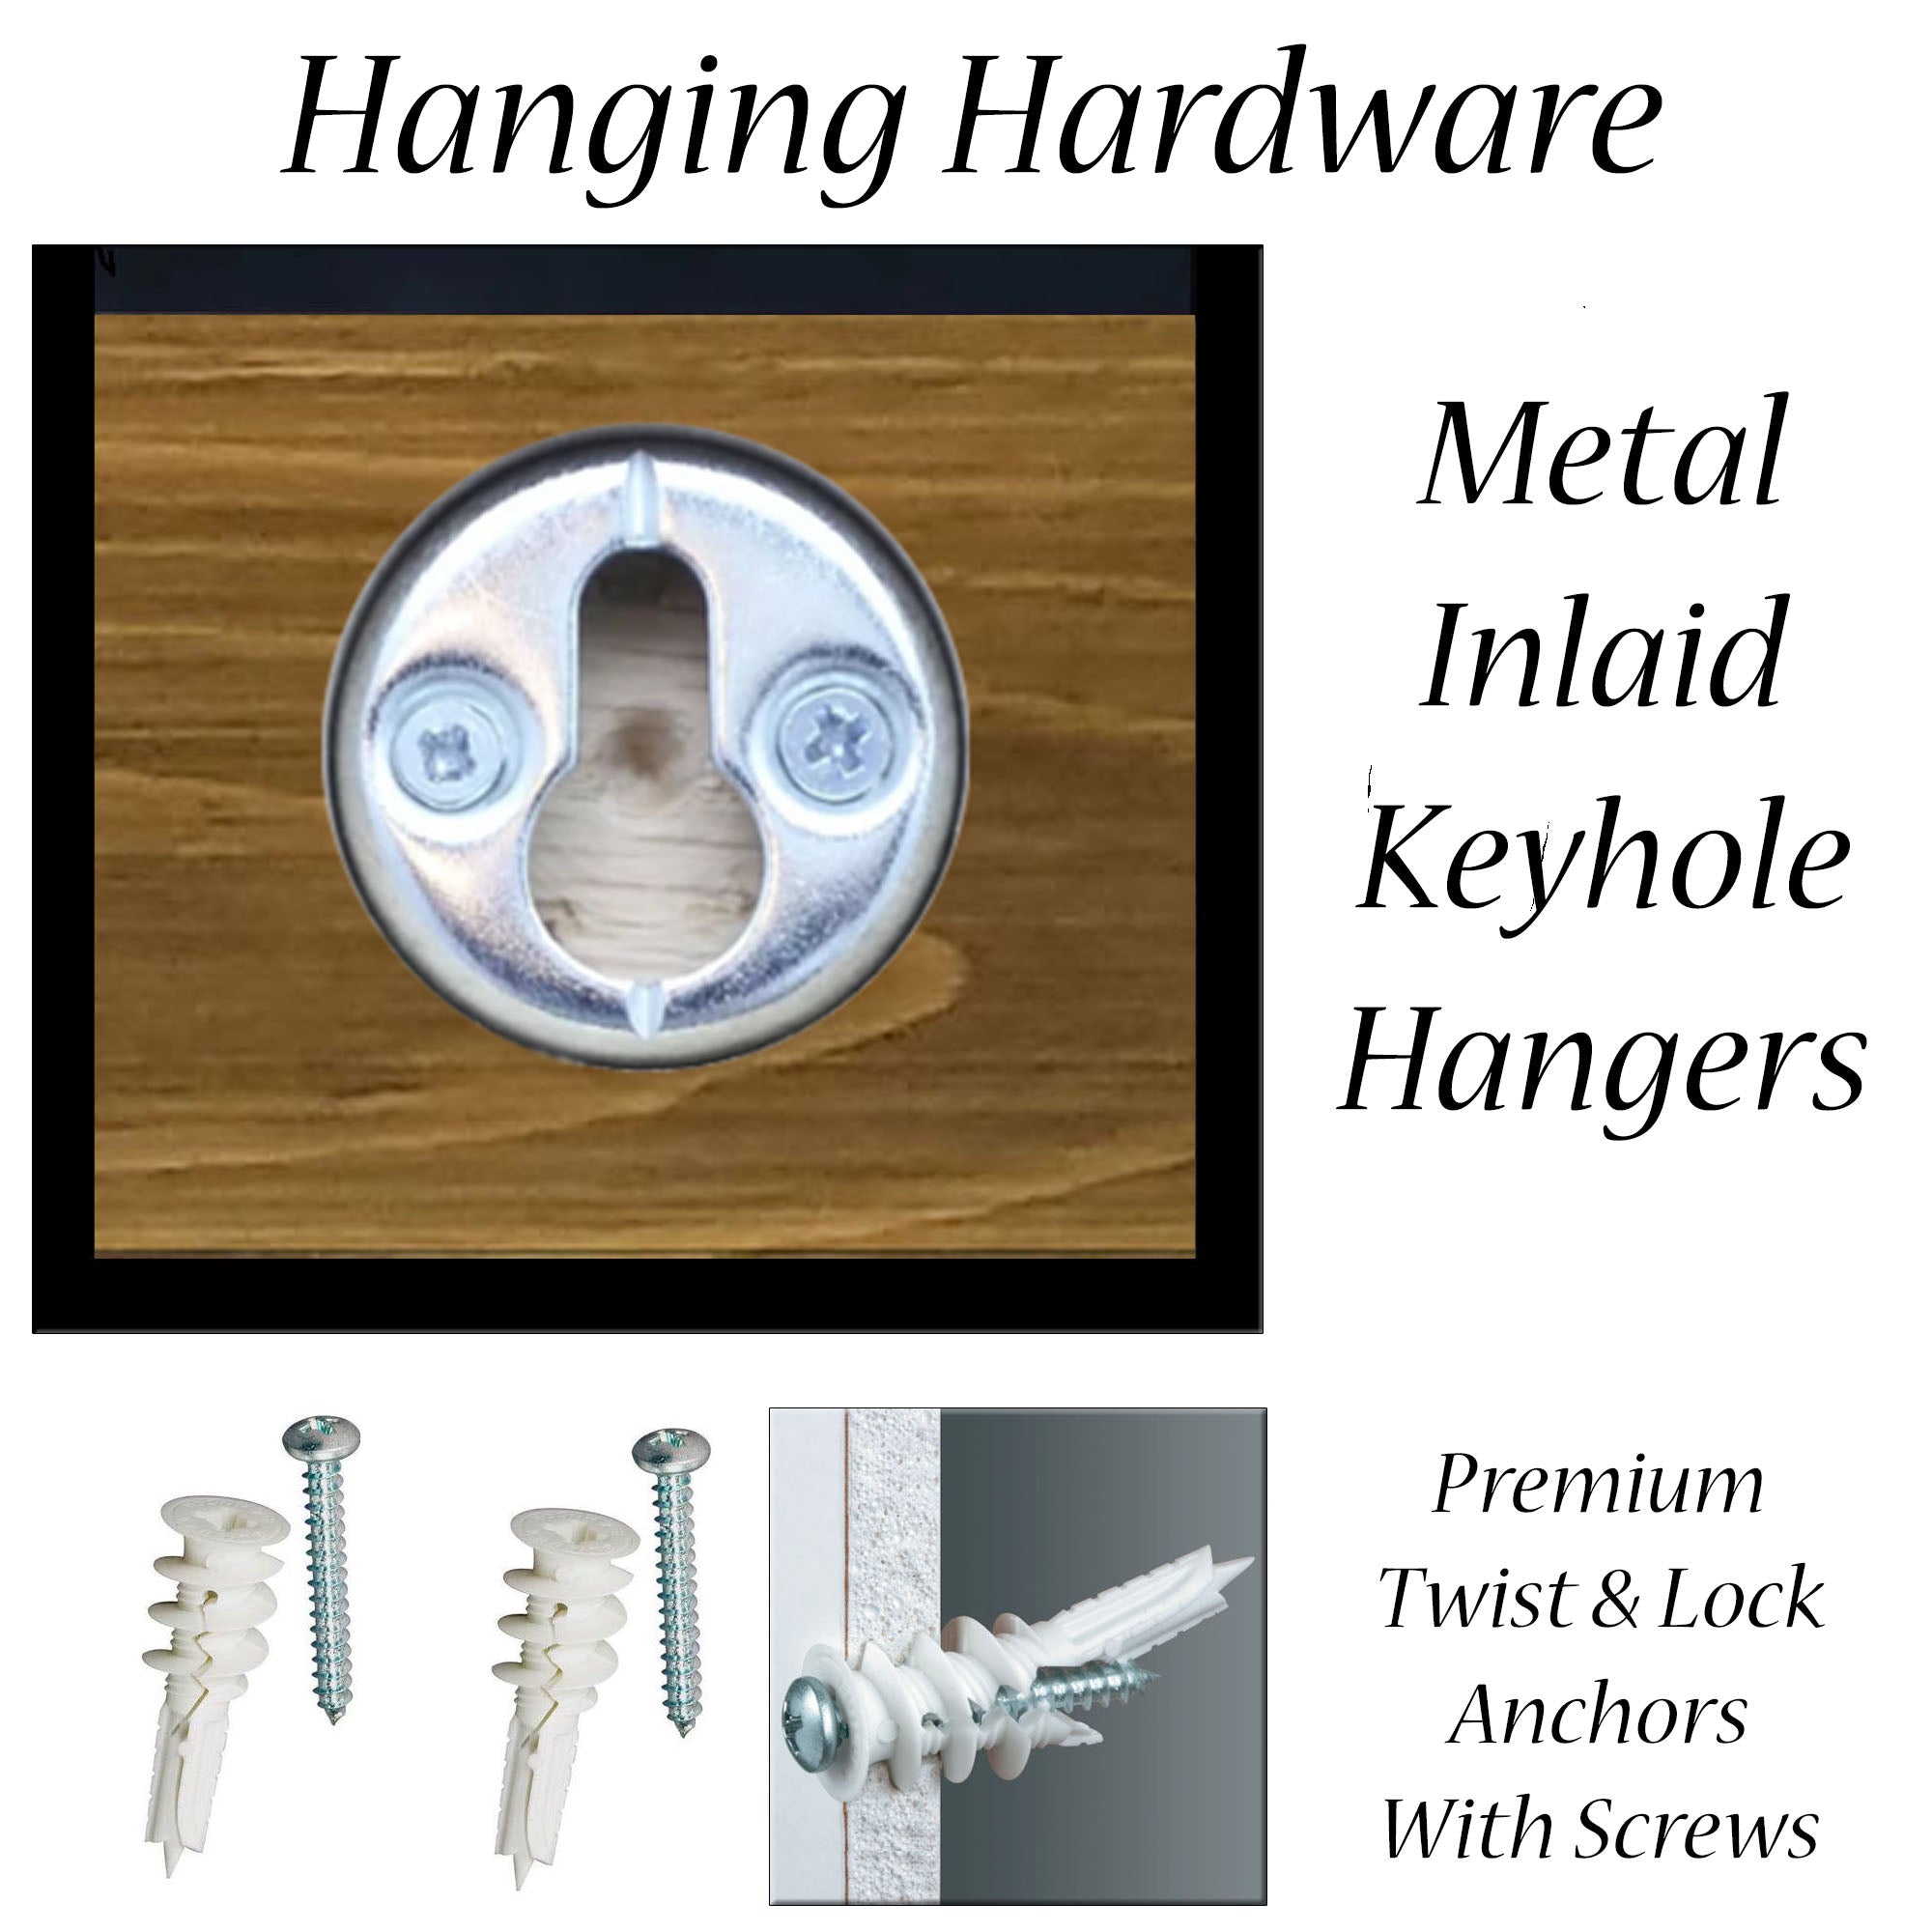 Hanging Hardware Keyhole Hangers & Drywall Anchors